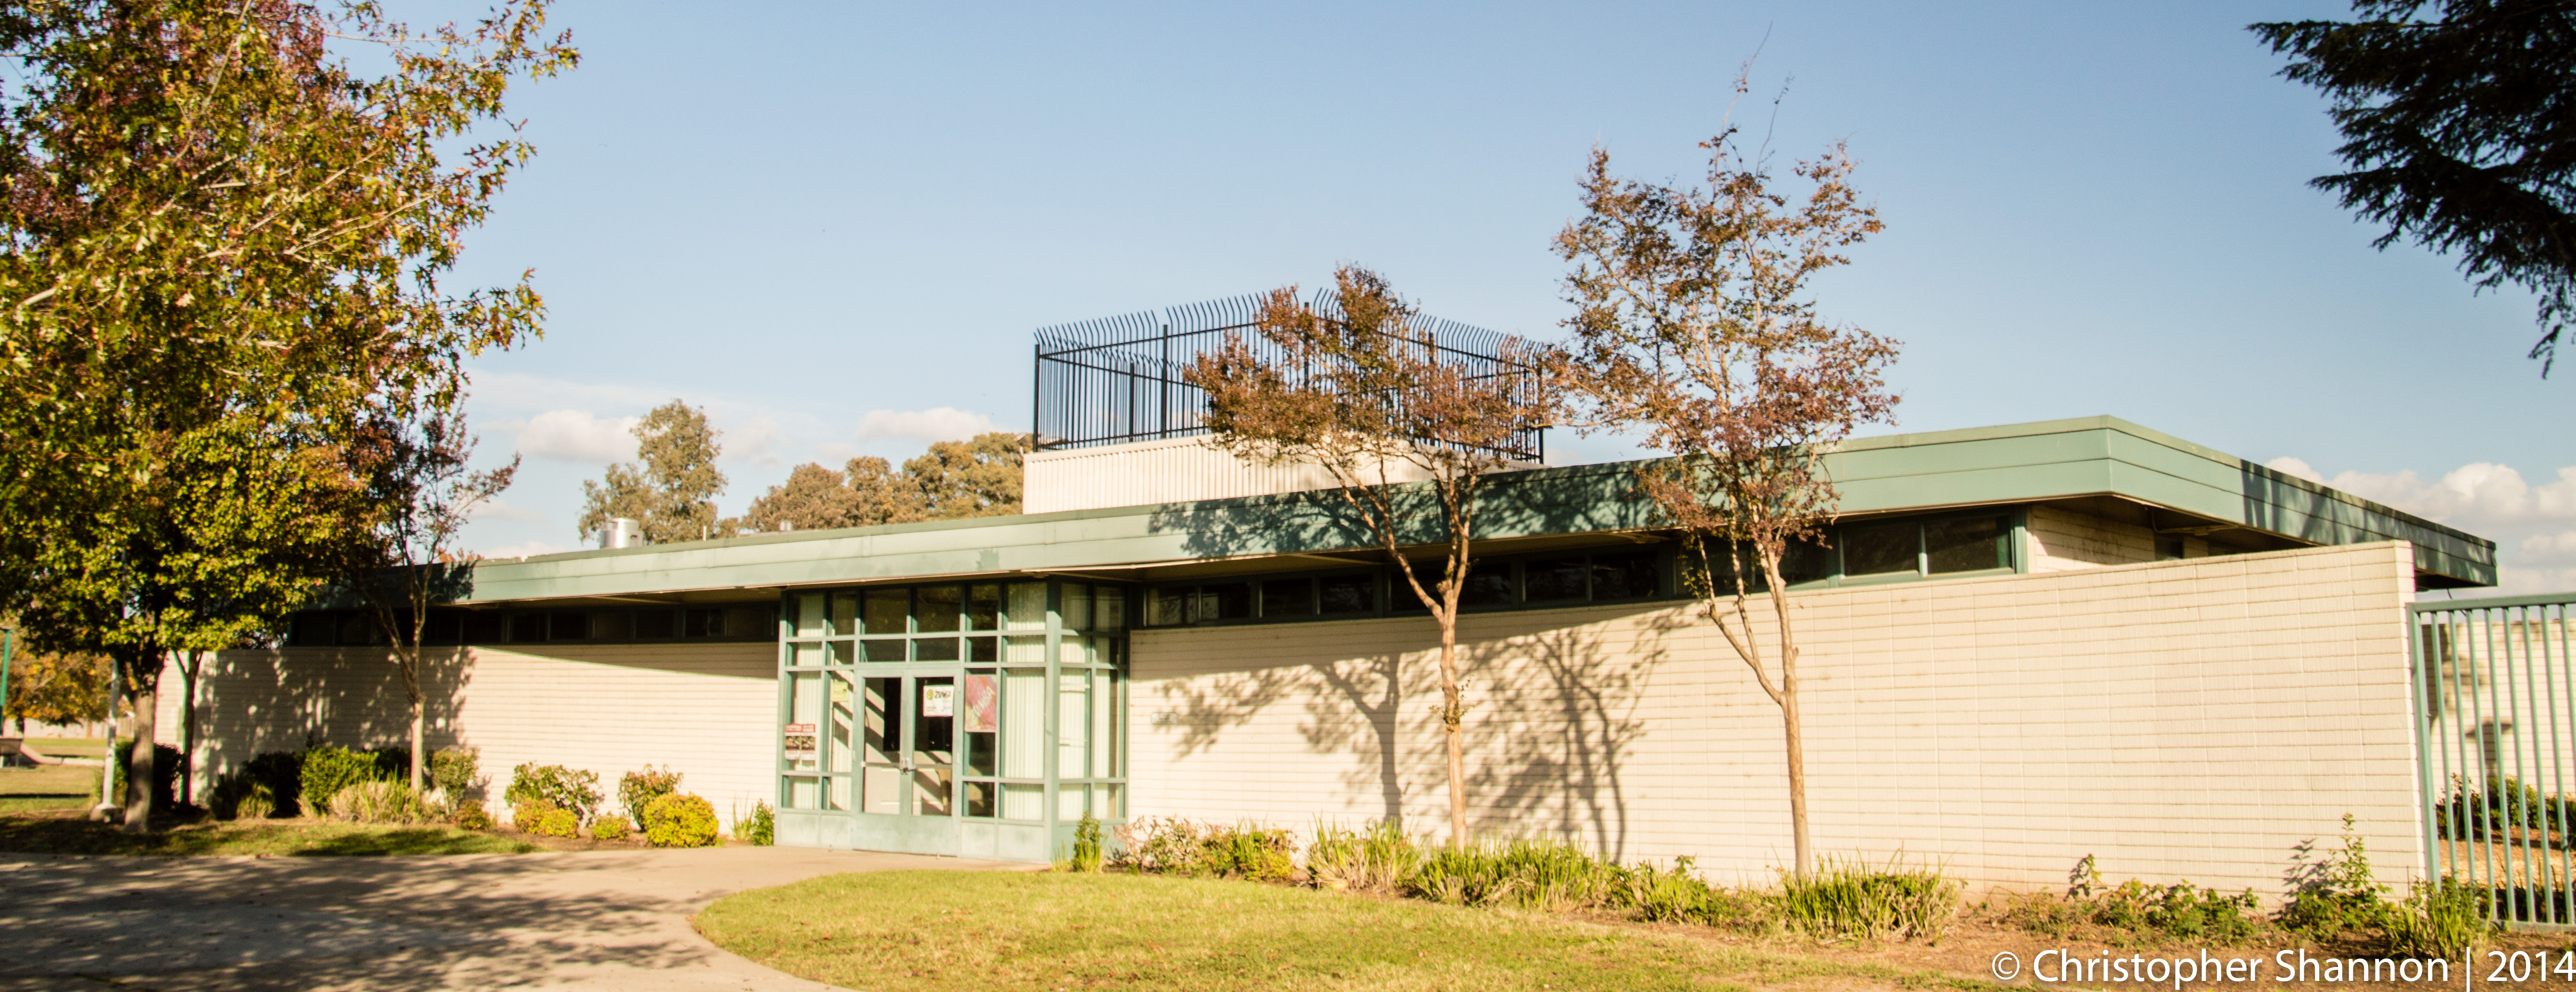 Image of Johnston Community Center Building